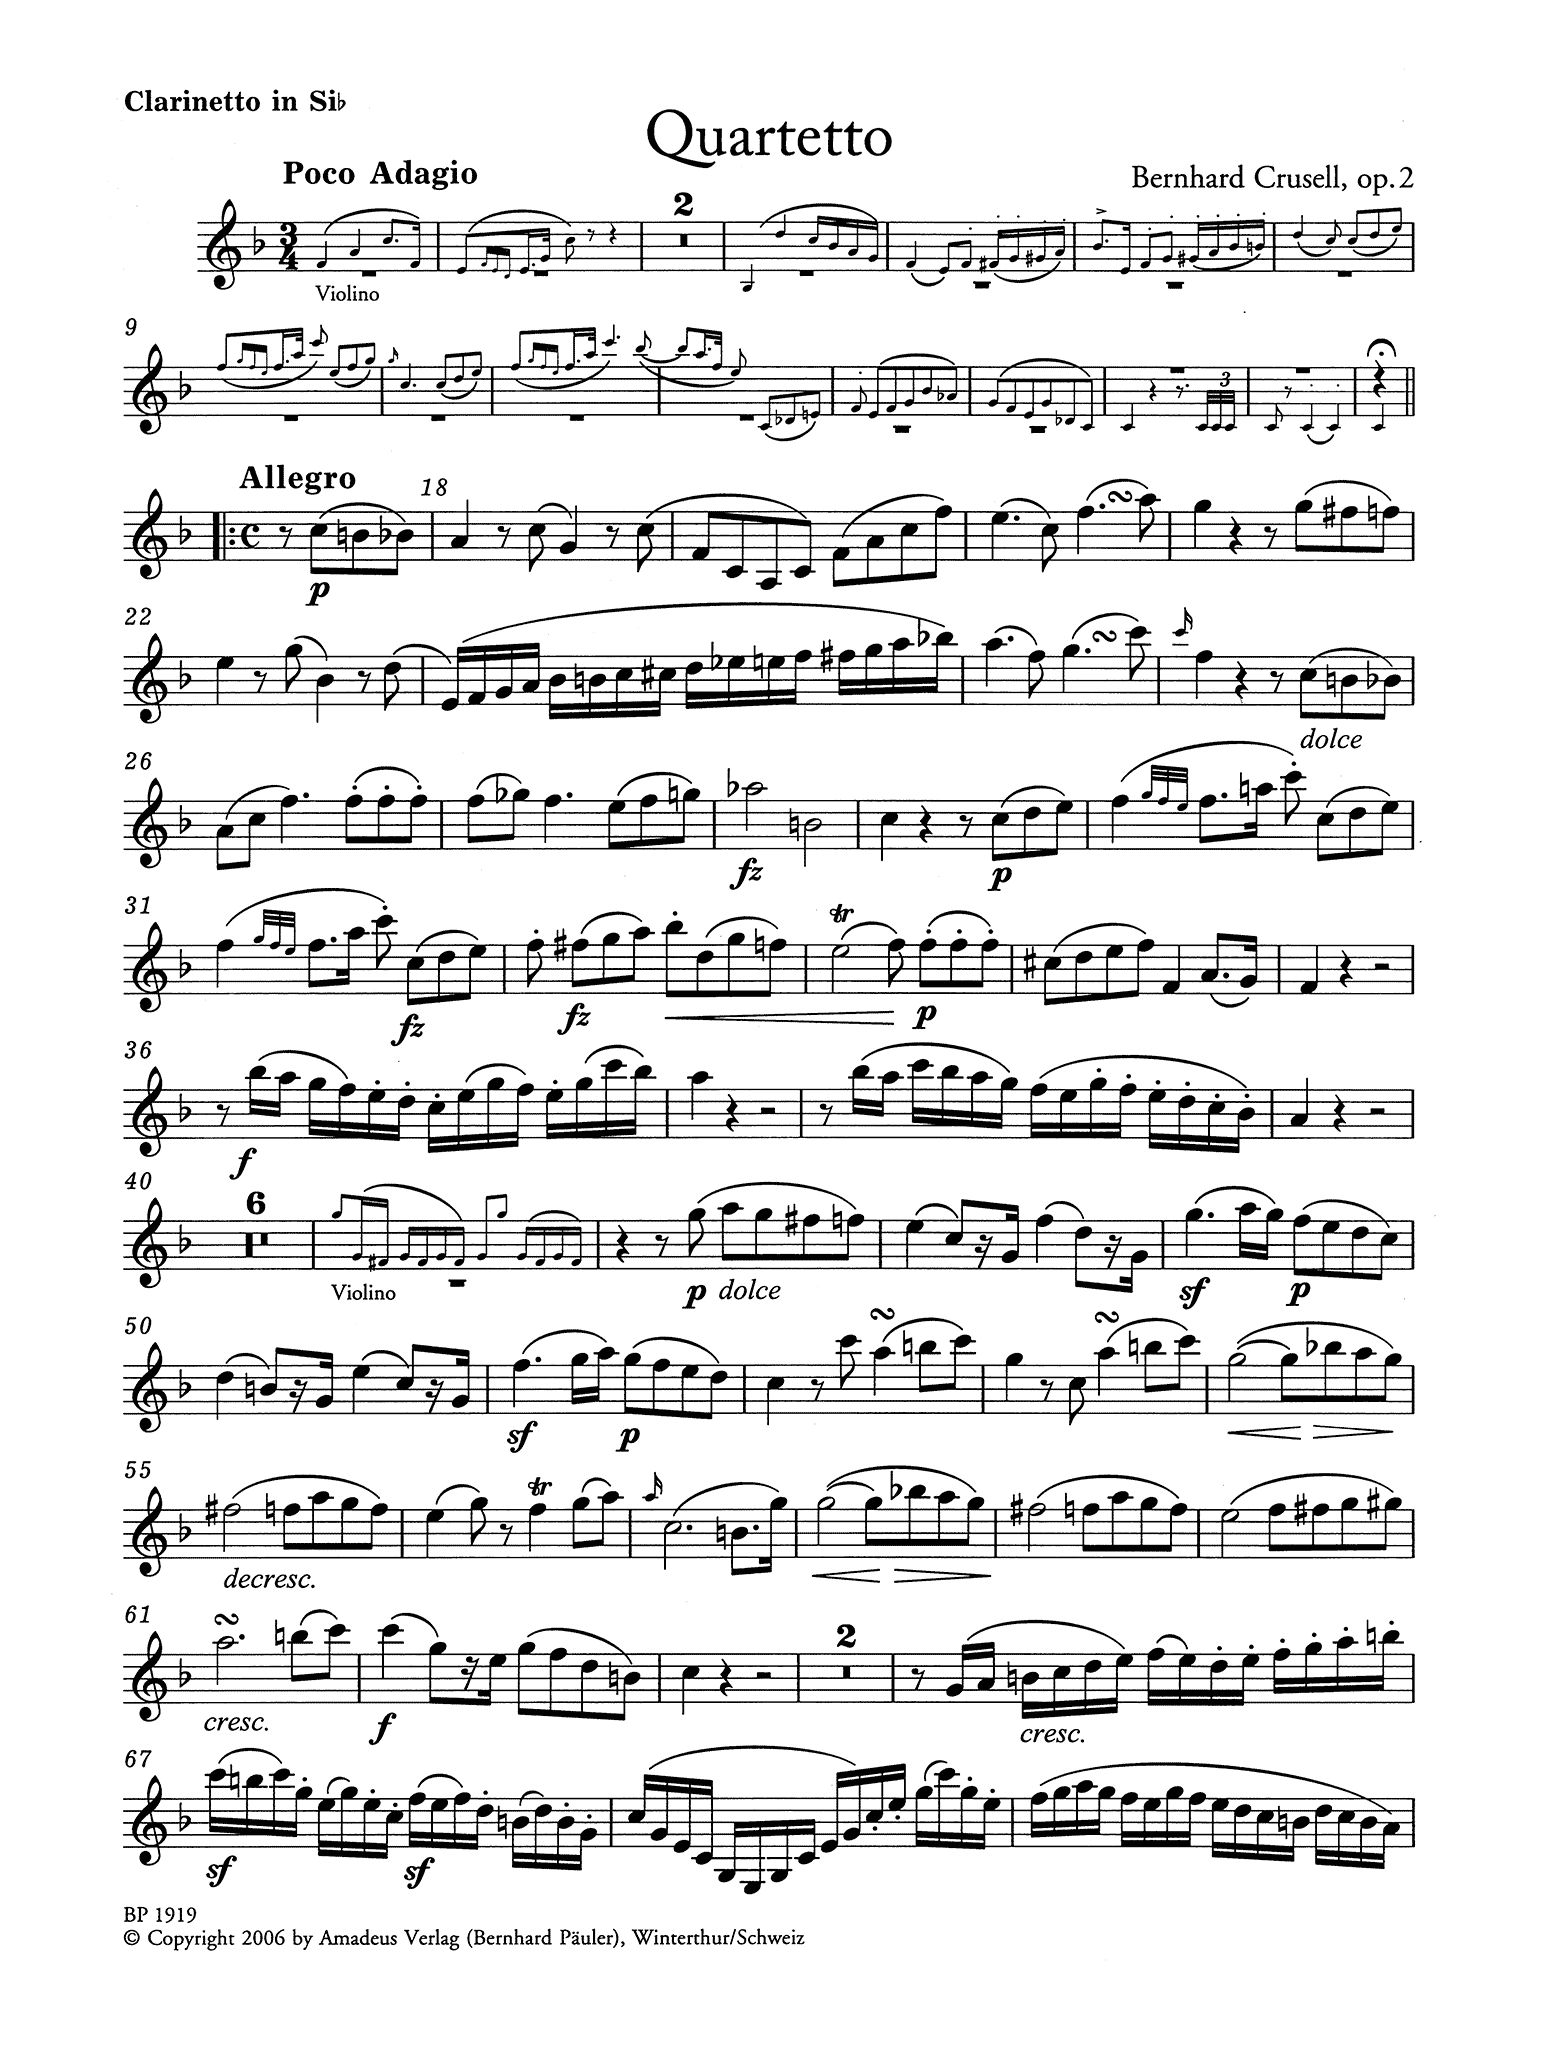 Crusell Clarinet Quartet No. 1 in E-flat Major, Op. 2 Clarinet part